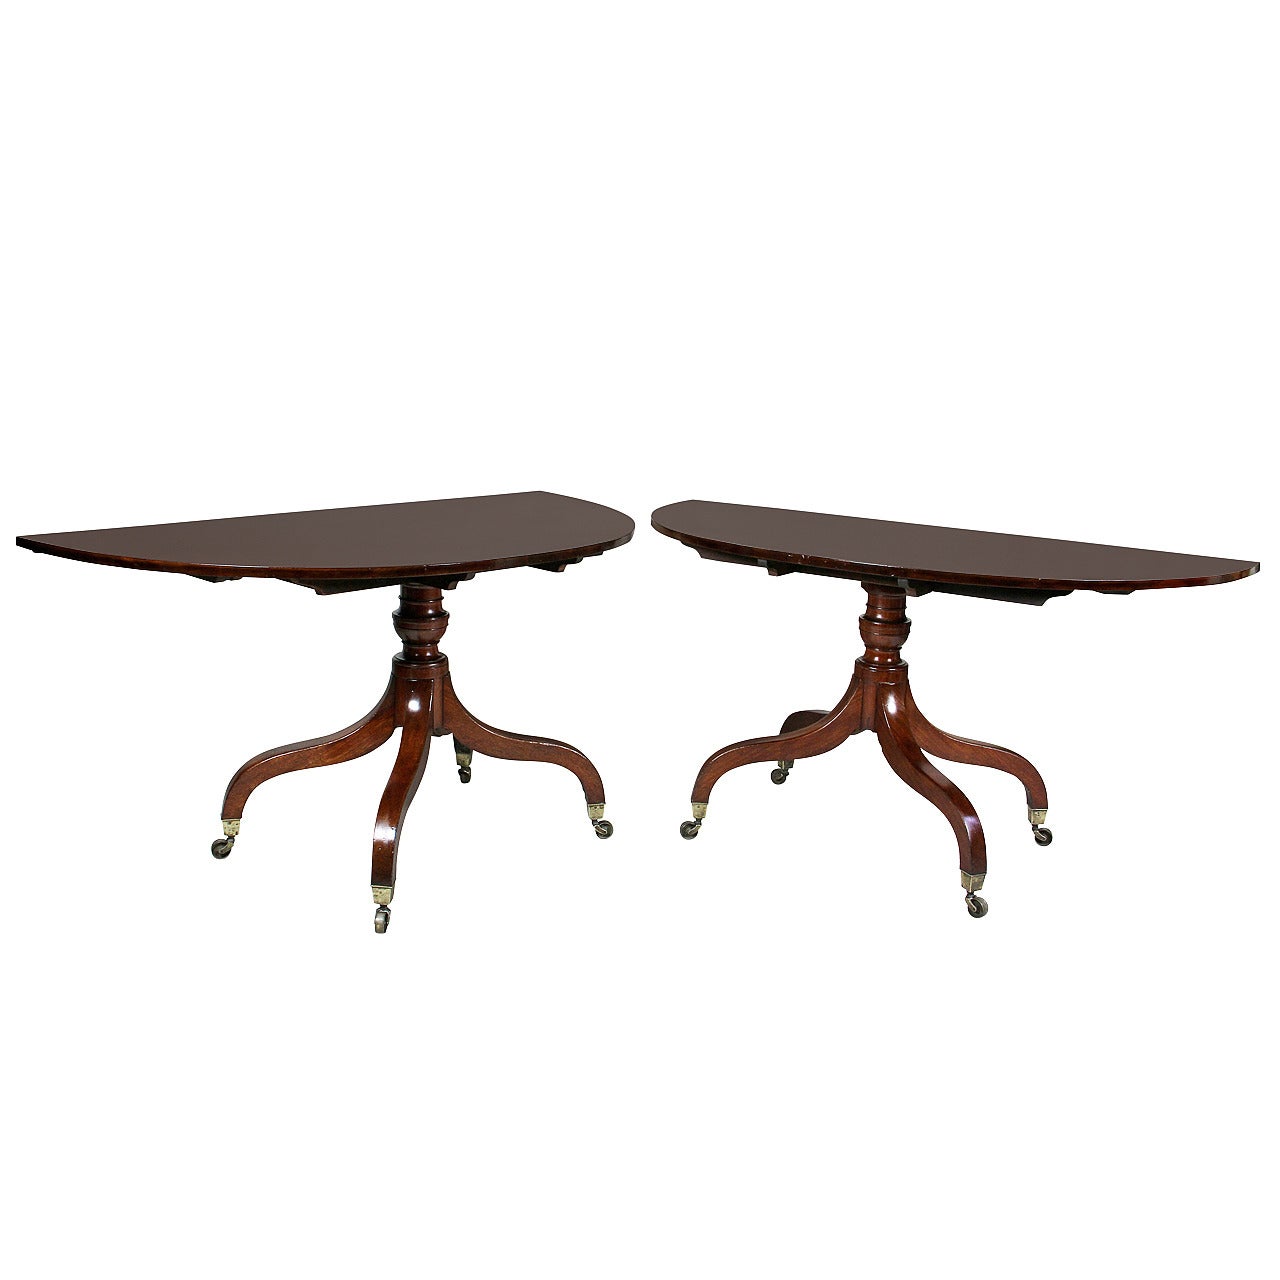 Unusual Irish Regency Two Pedestal Dining Table